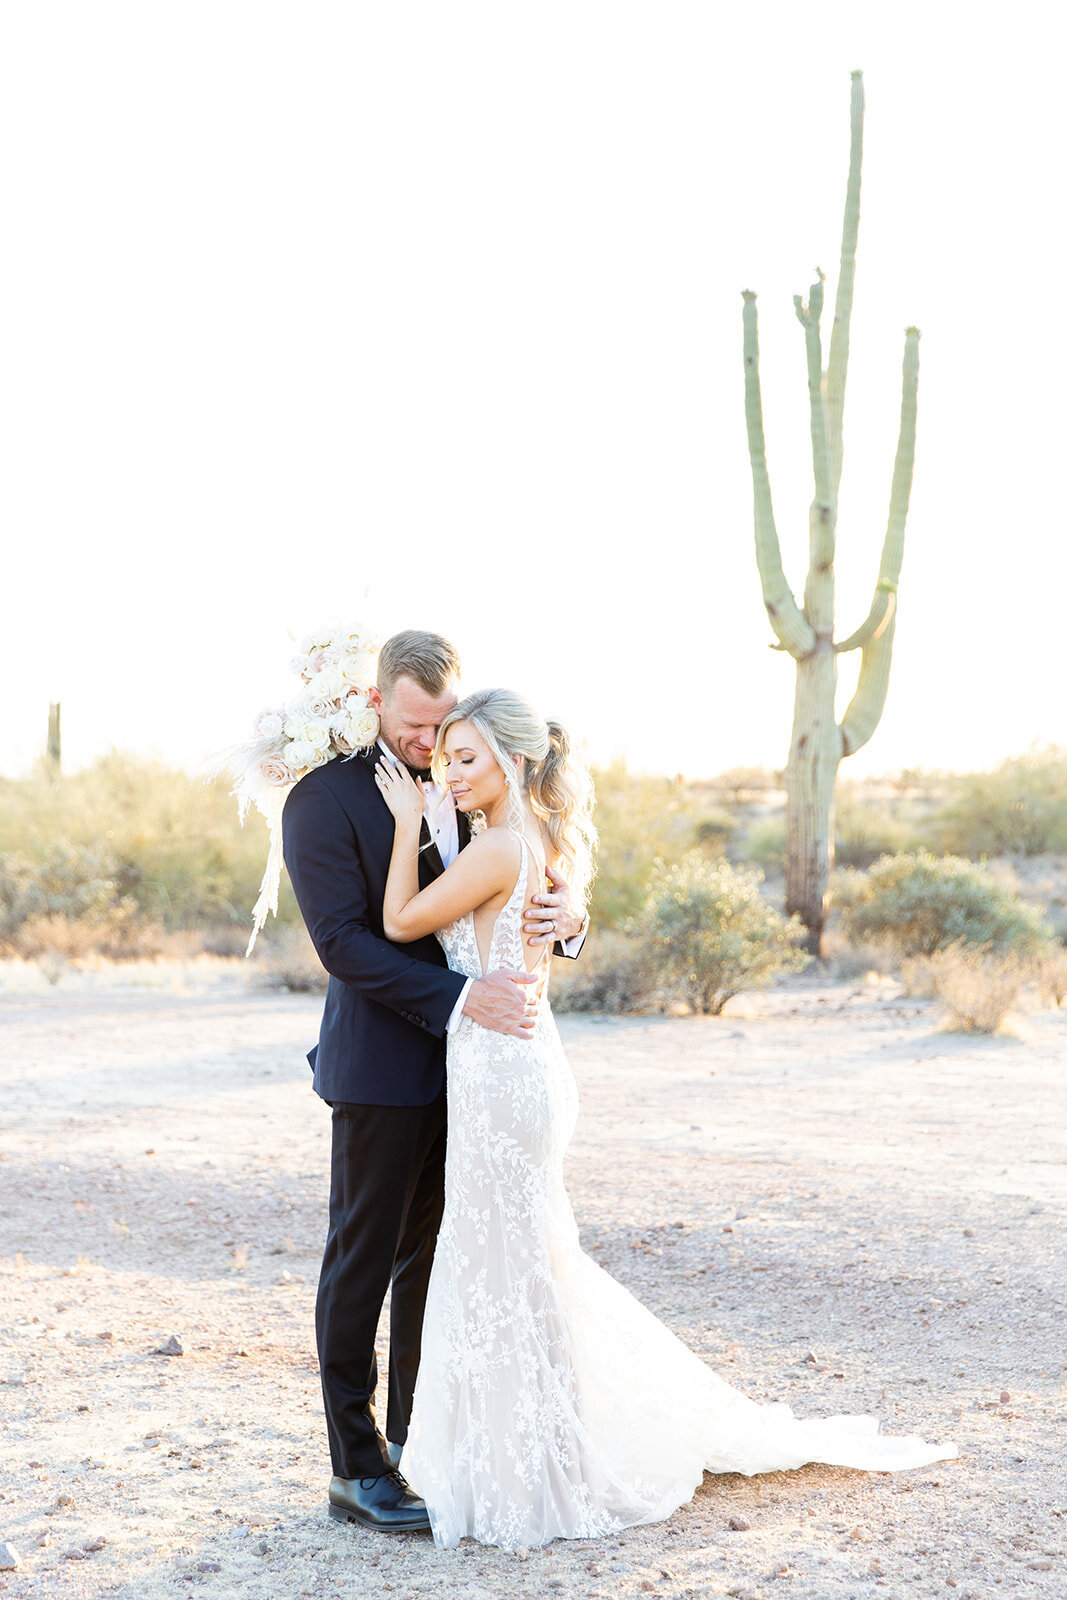 Karlie Colleen Photography - Ashley & Grant Wedding - The Paseo - Phoenix Arizona-830